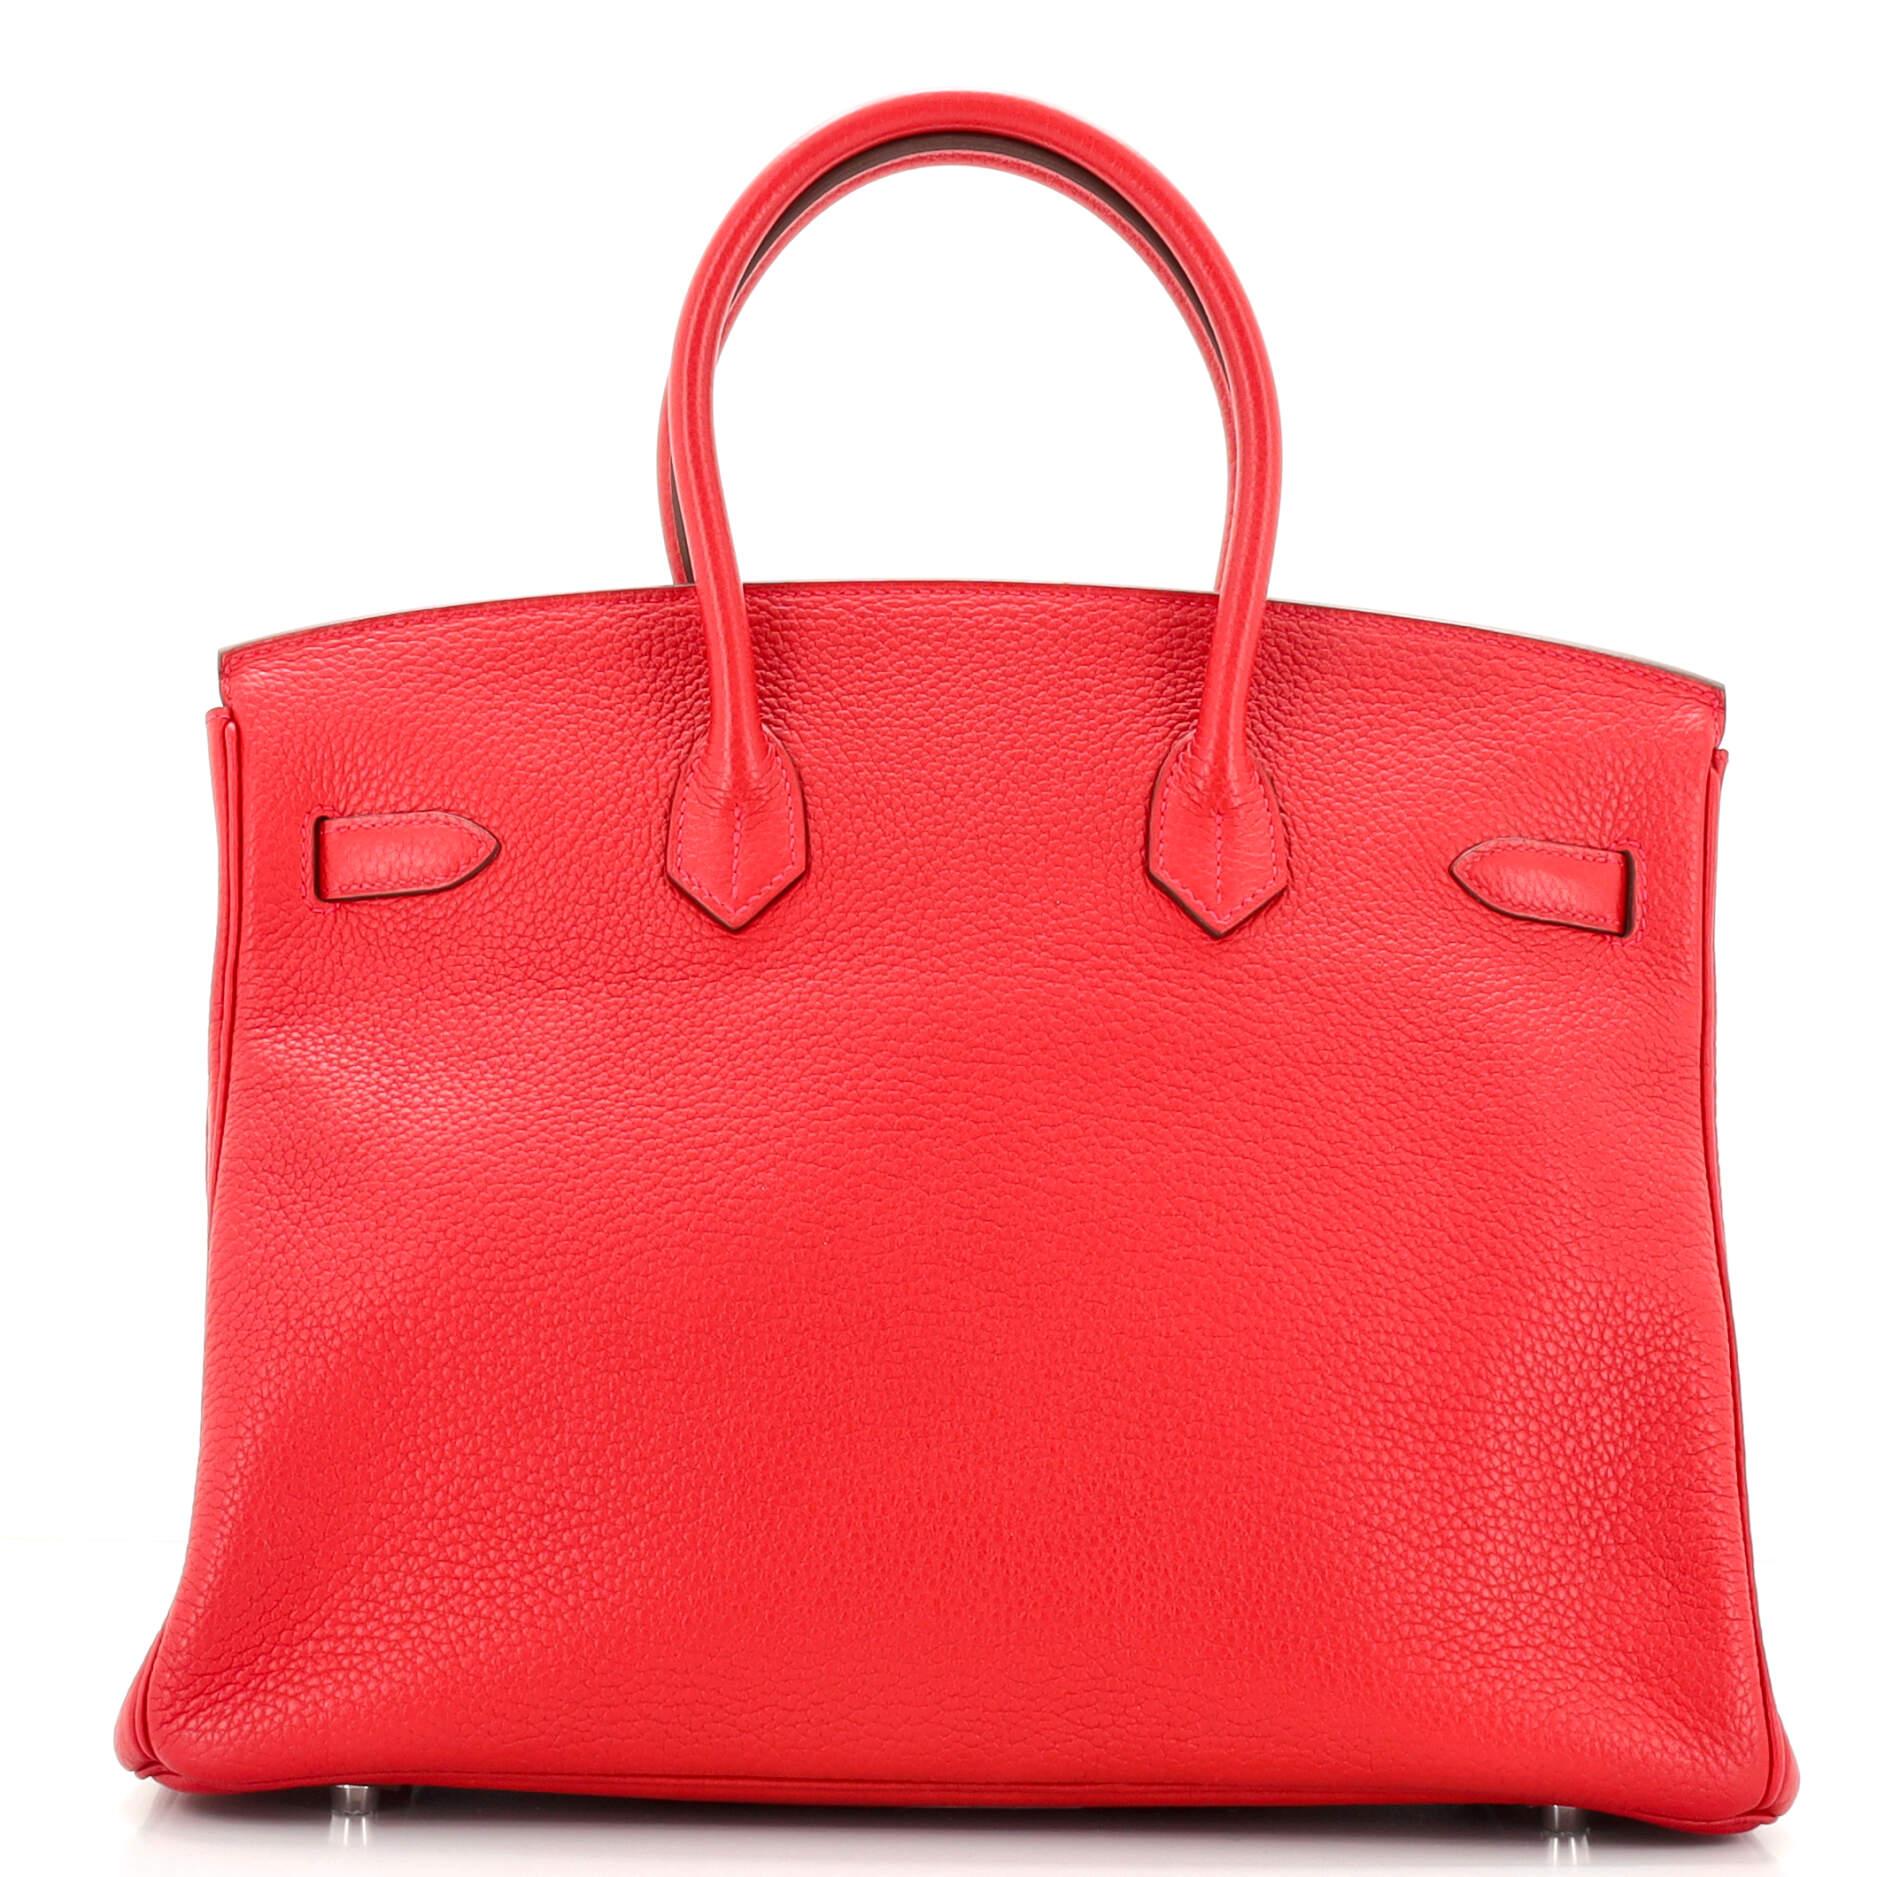 Red Hermes Birkin Handbag Rouge Vif Togo with Palladium Hardware 35